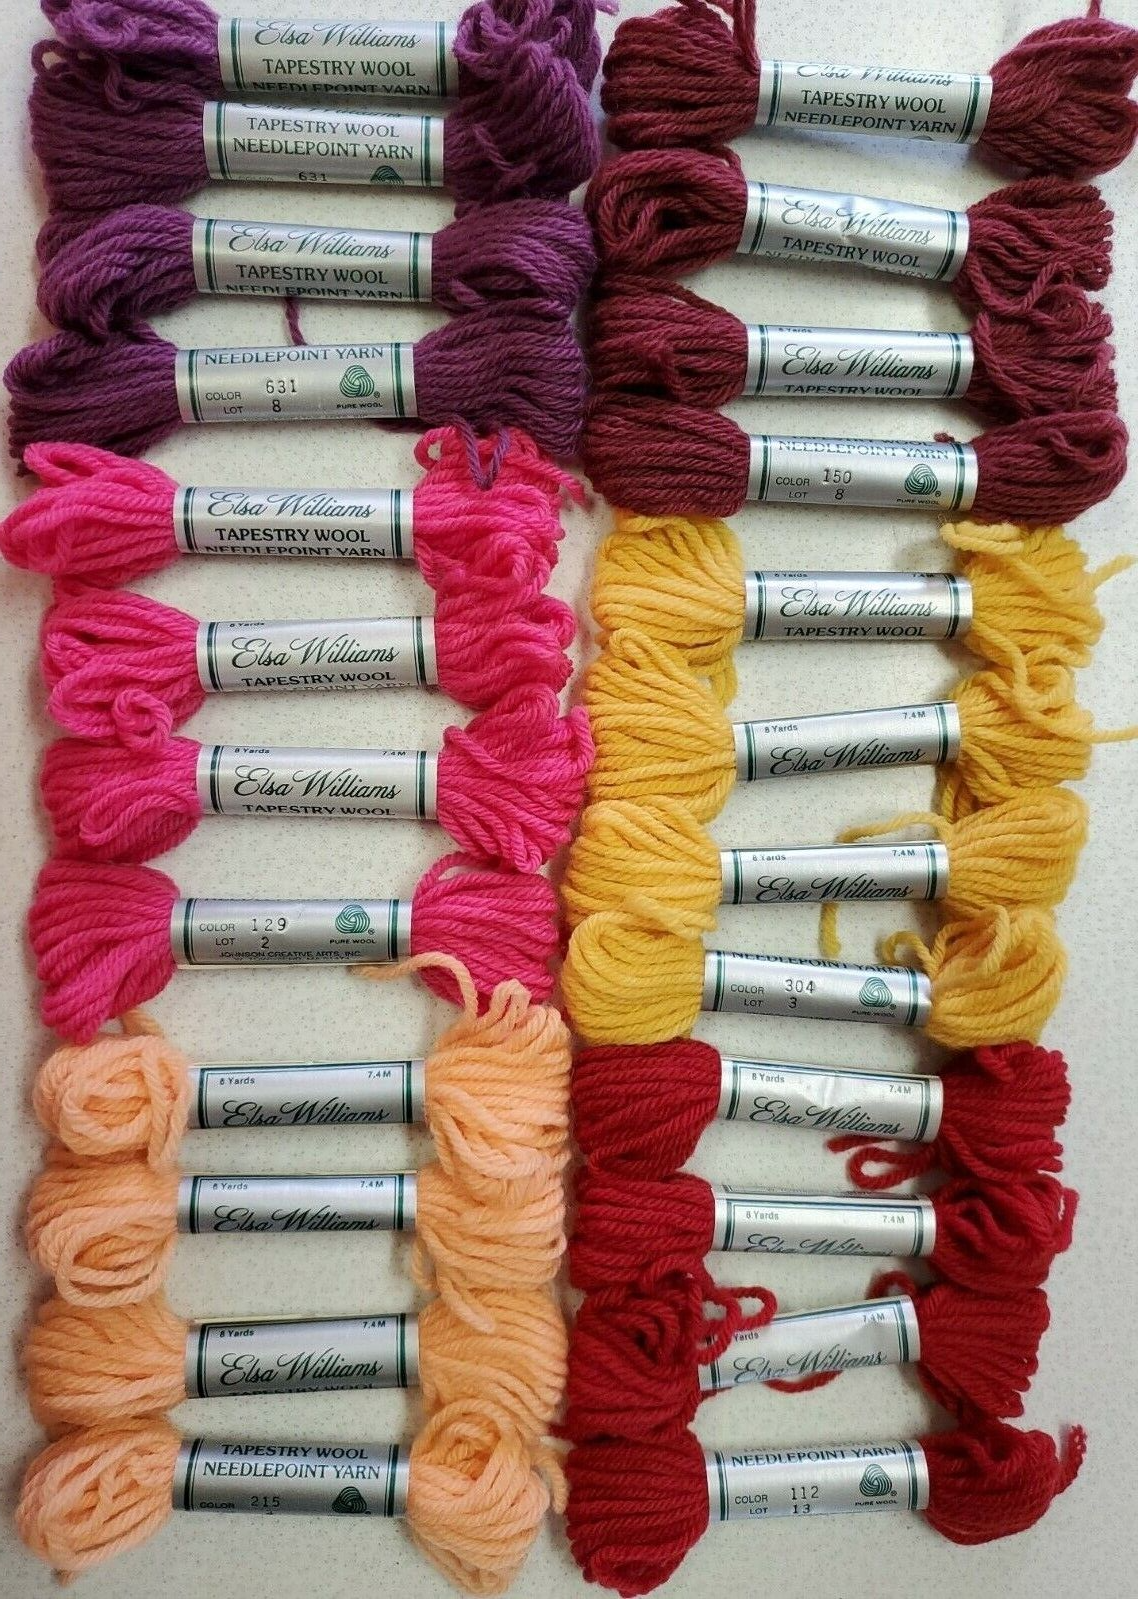 24 Skeins of Vintage Elsa Williams Needlepoint Yarn Tapestry Wool 6 Colors Lot Elsa Williams Does Not Apply